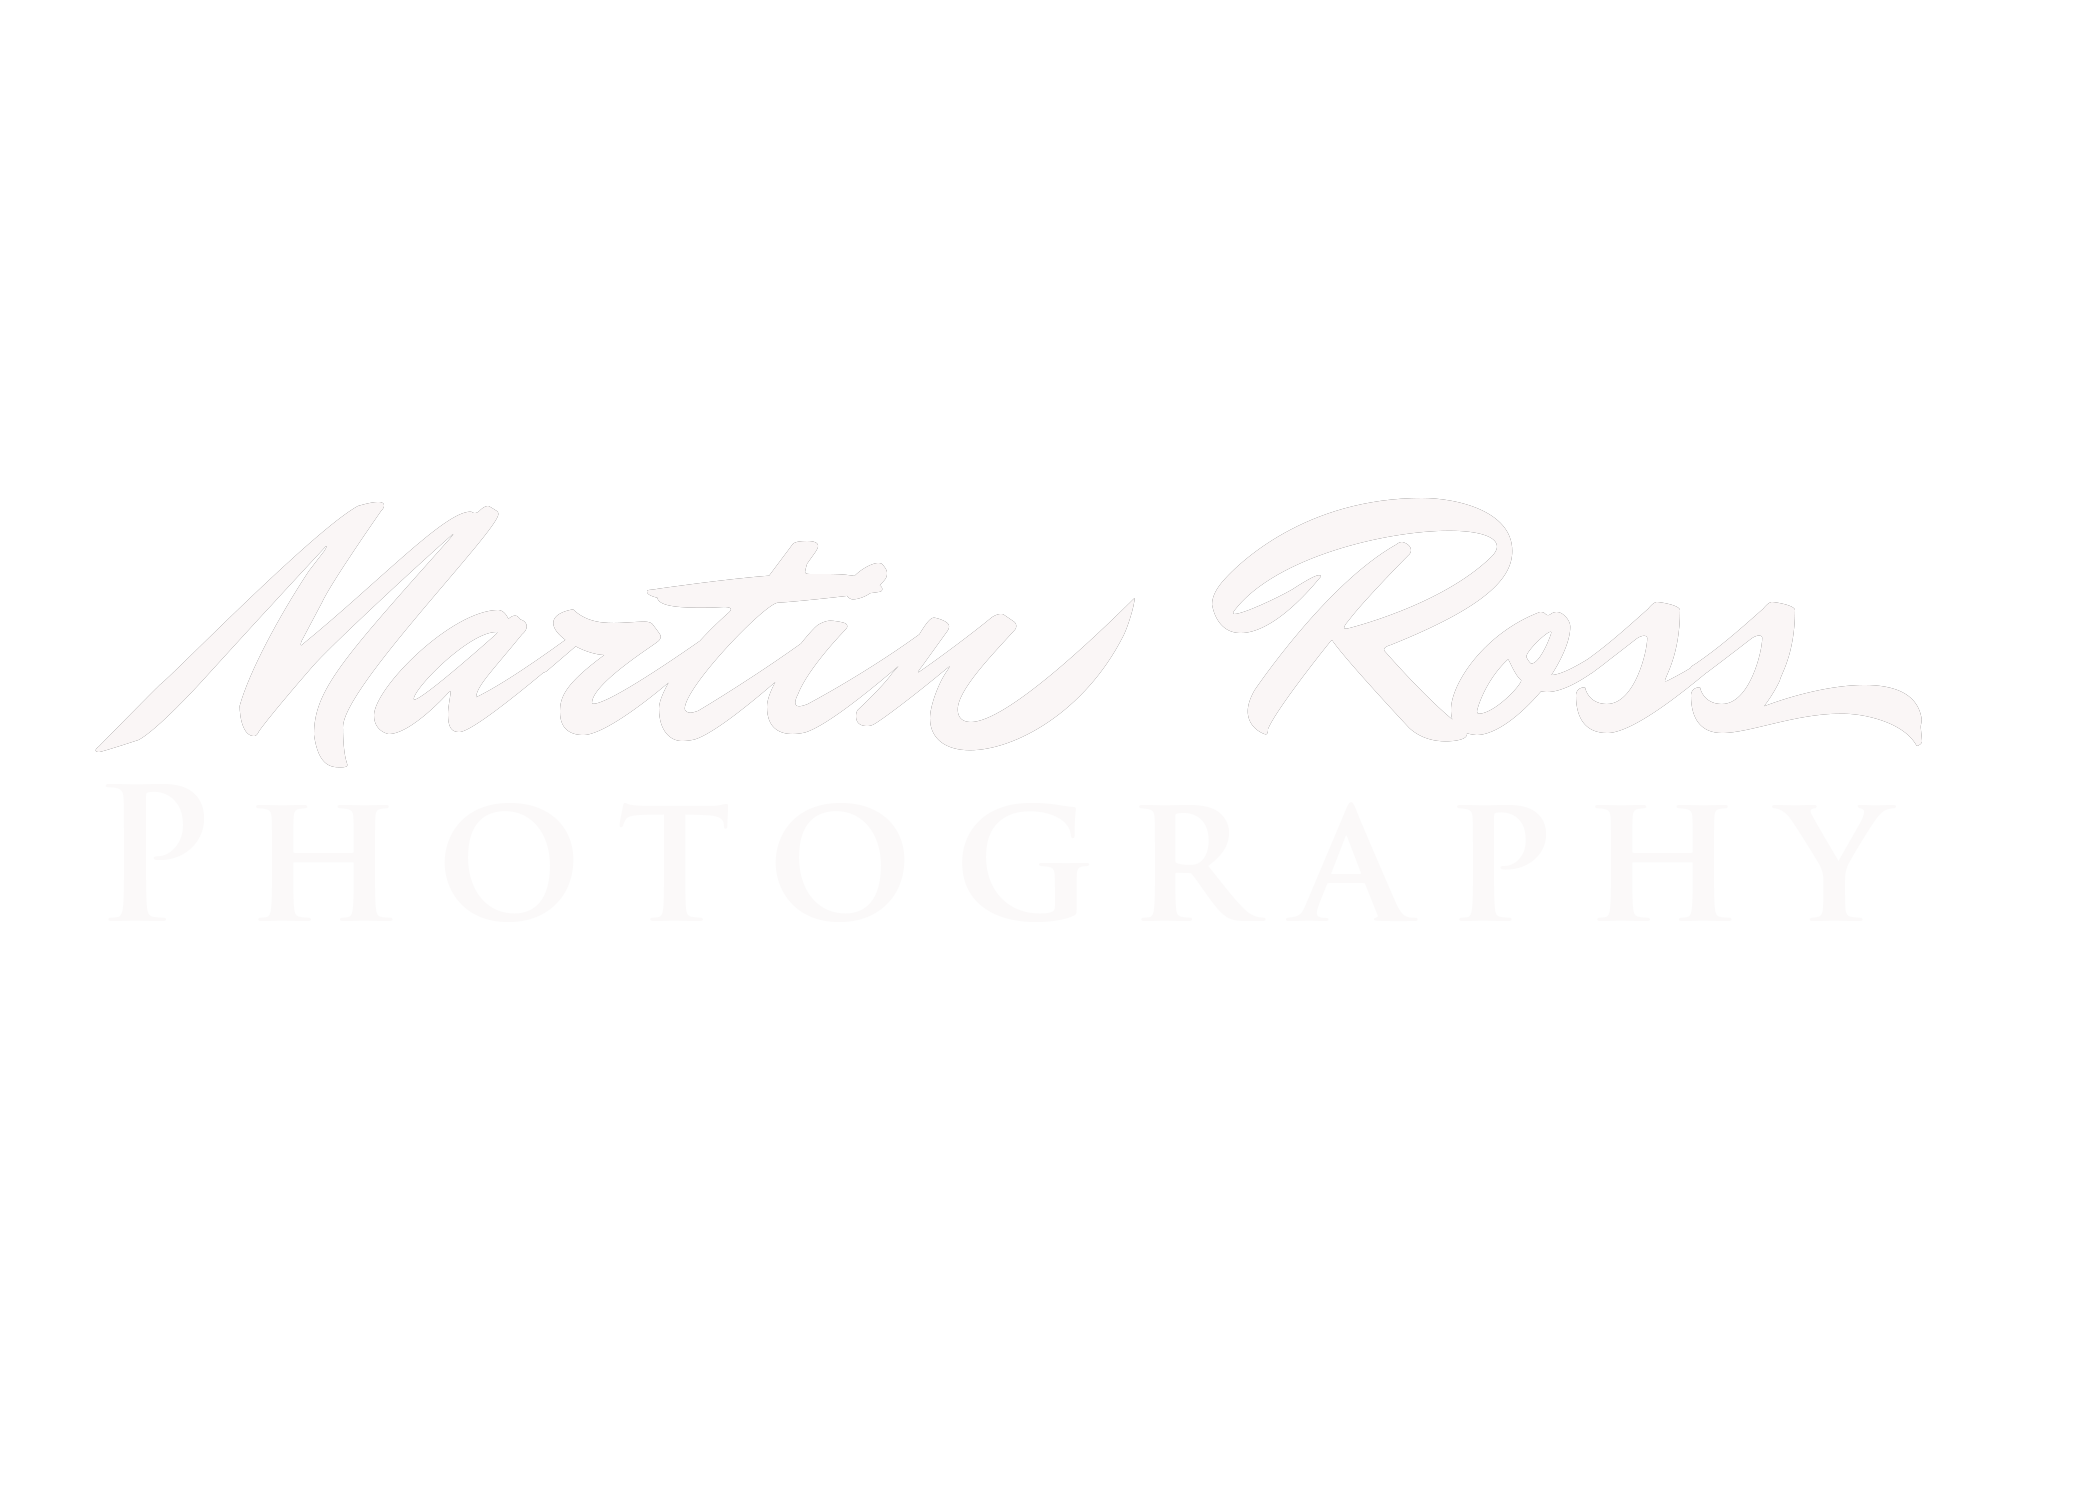 Martin Ross